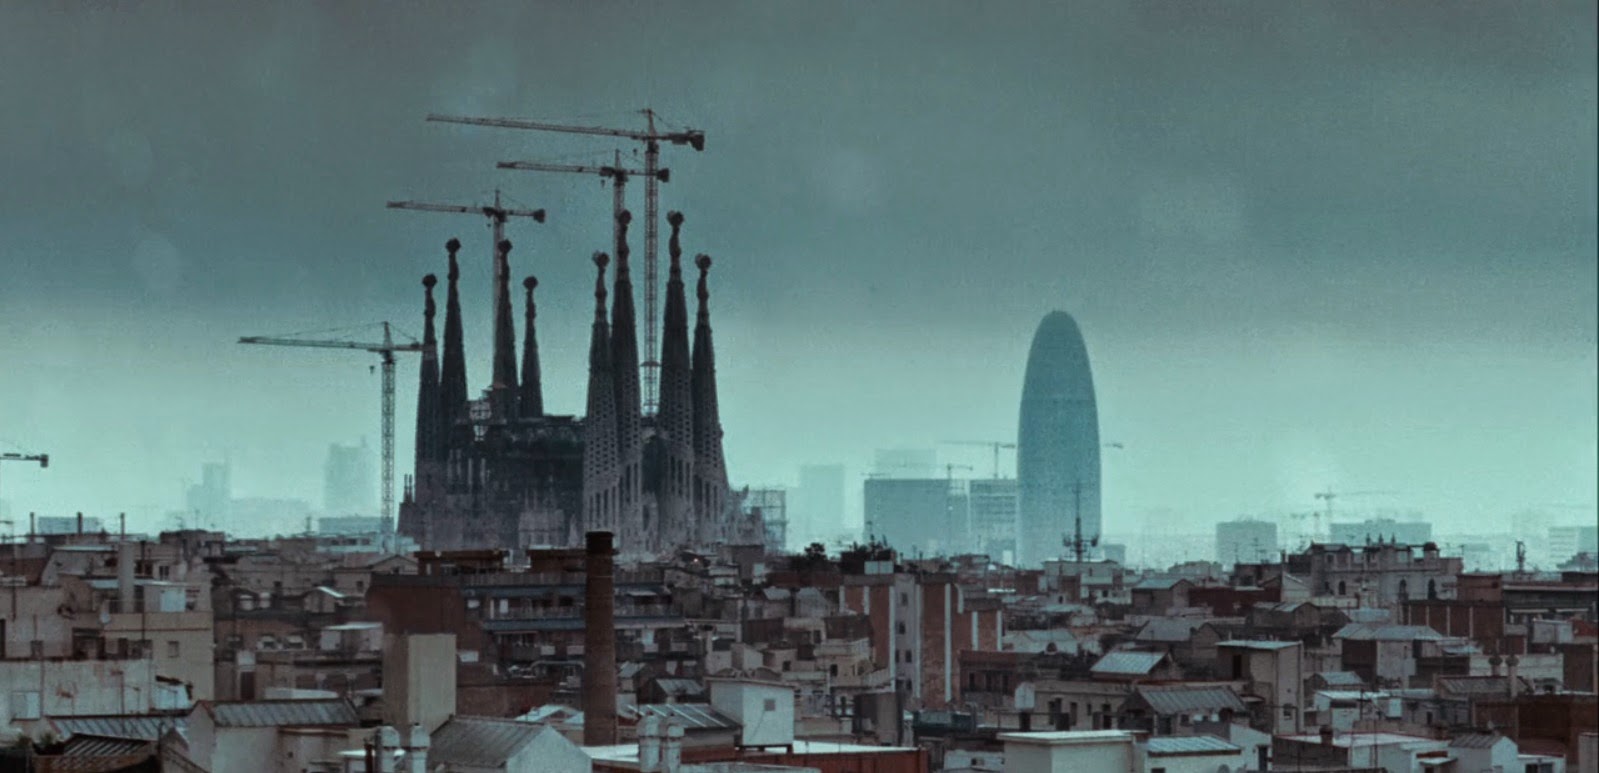 Screen grab, Biutiful, Barcelona skyline.